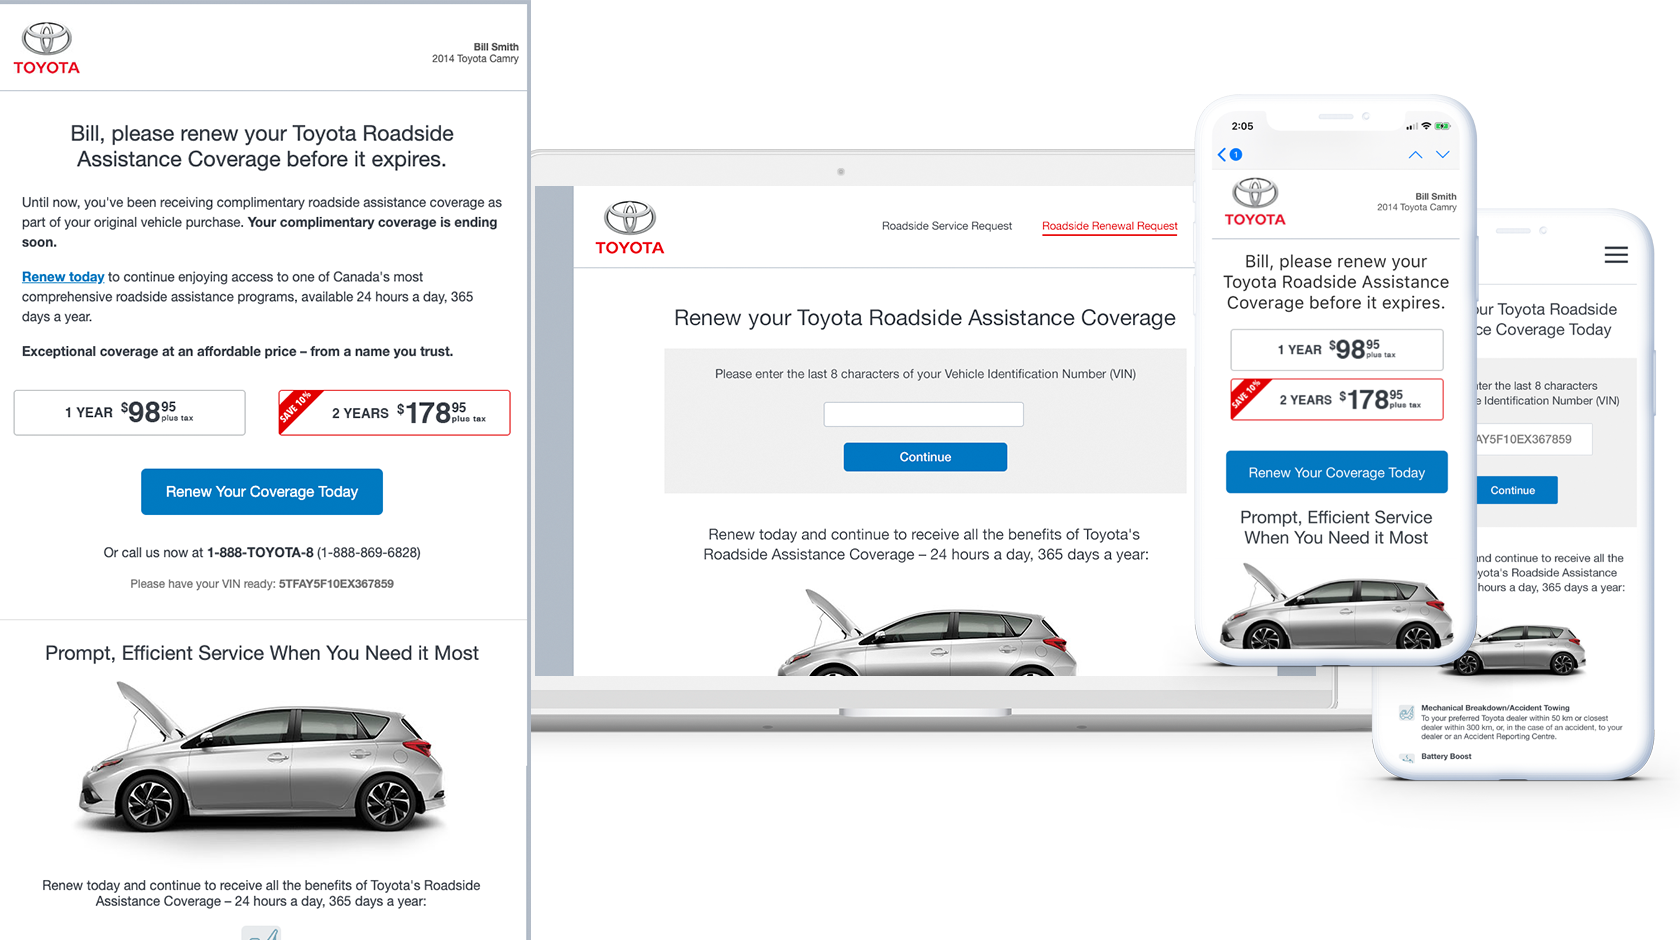 Toyota Roadside Assistance Renewal Email screens